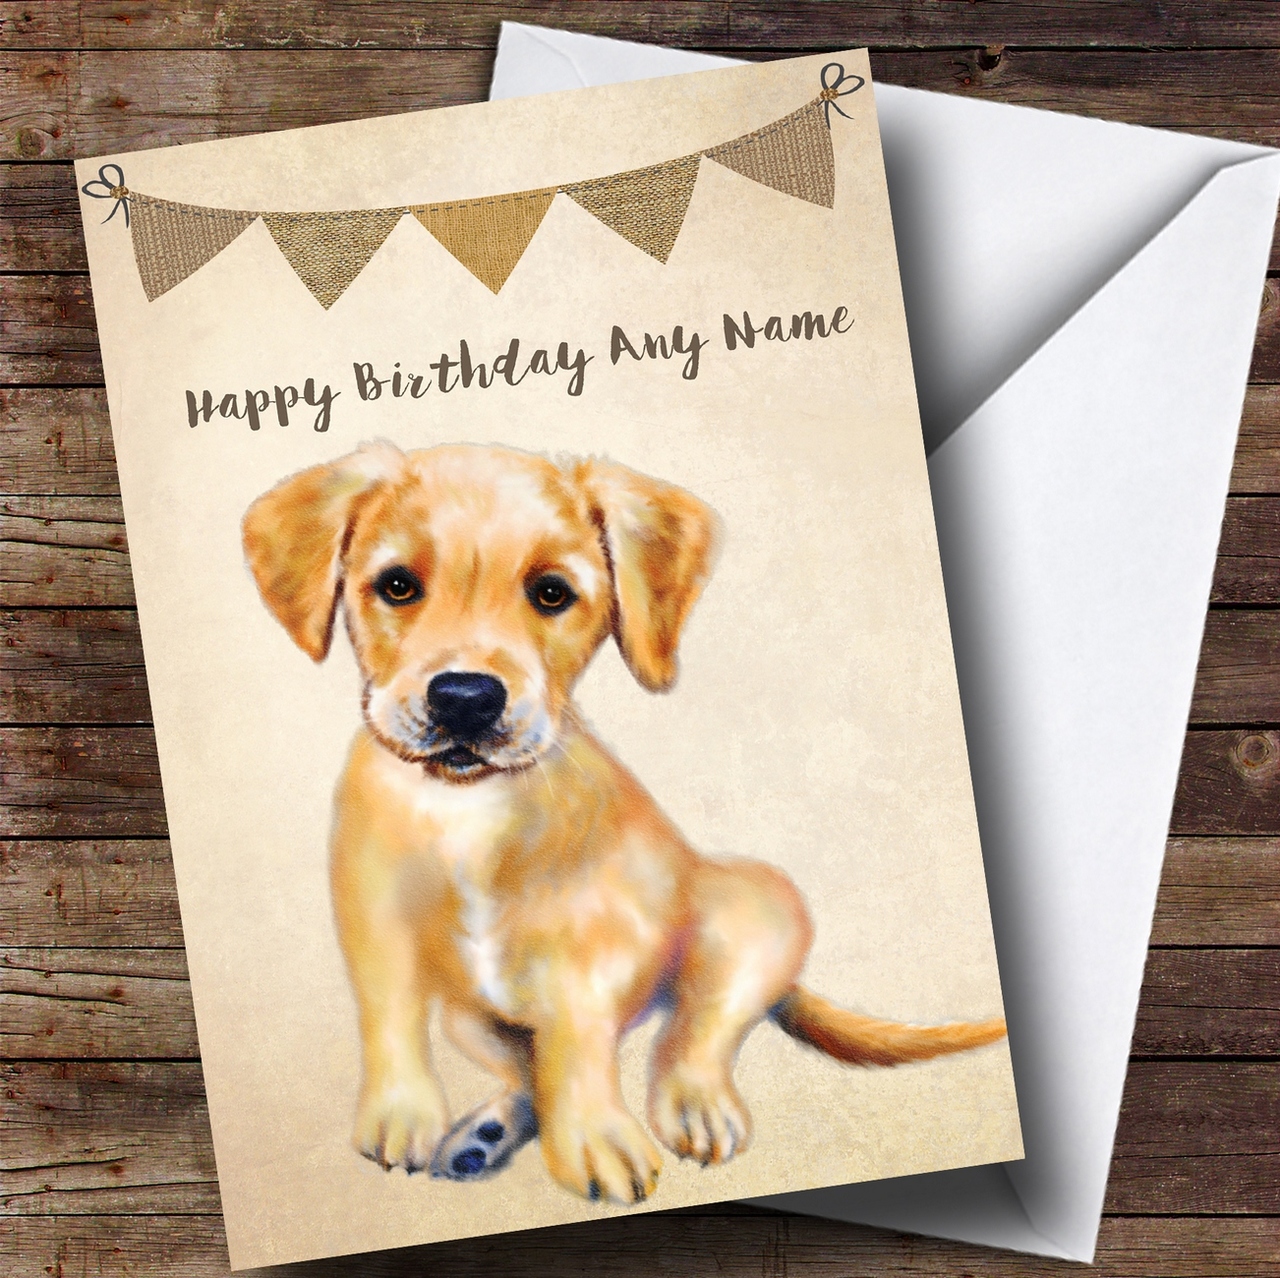 Animal Birthday Cards Funny Animal Birthday Cards See More Ideas